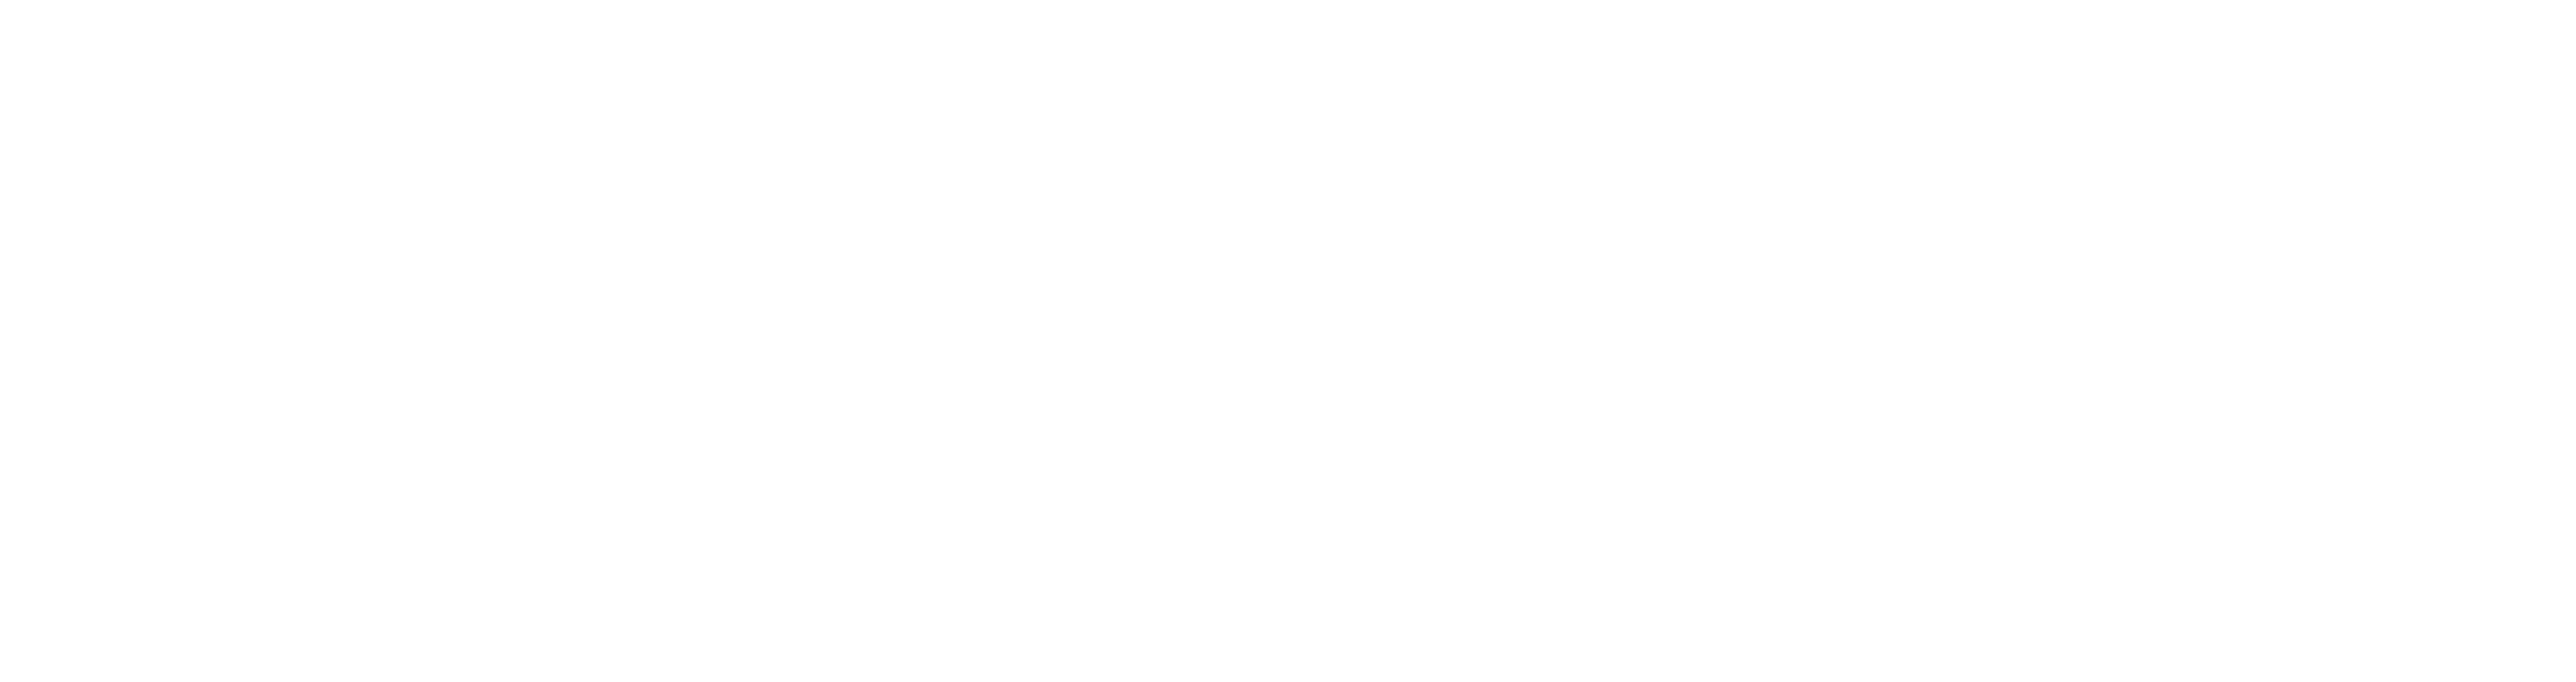 Topeka Rescue Mission